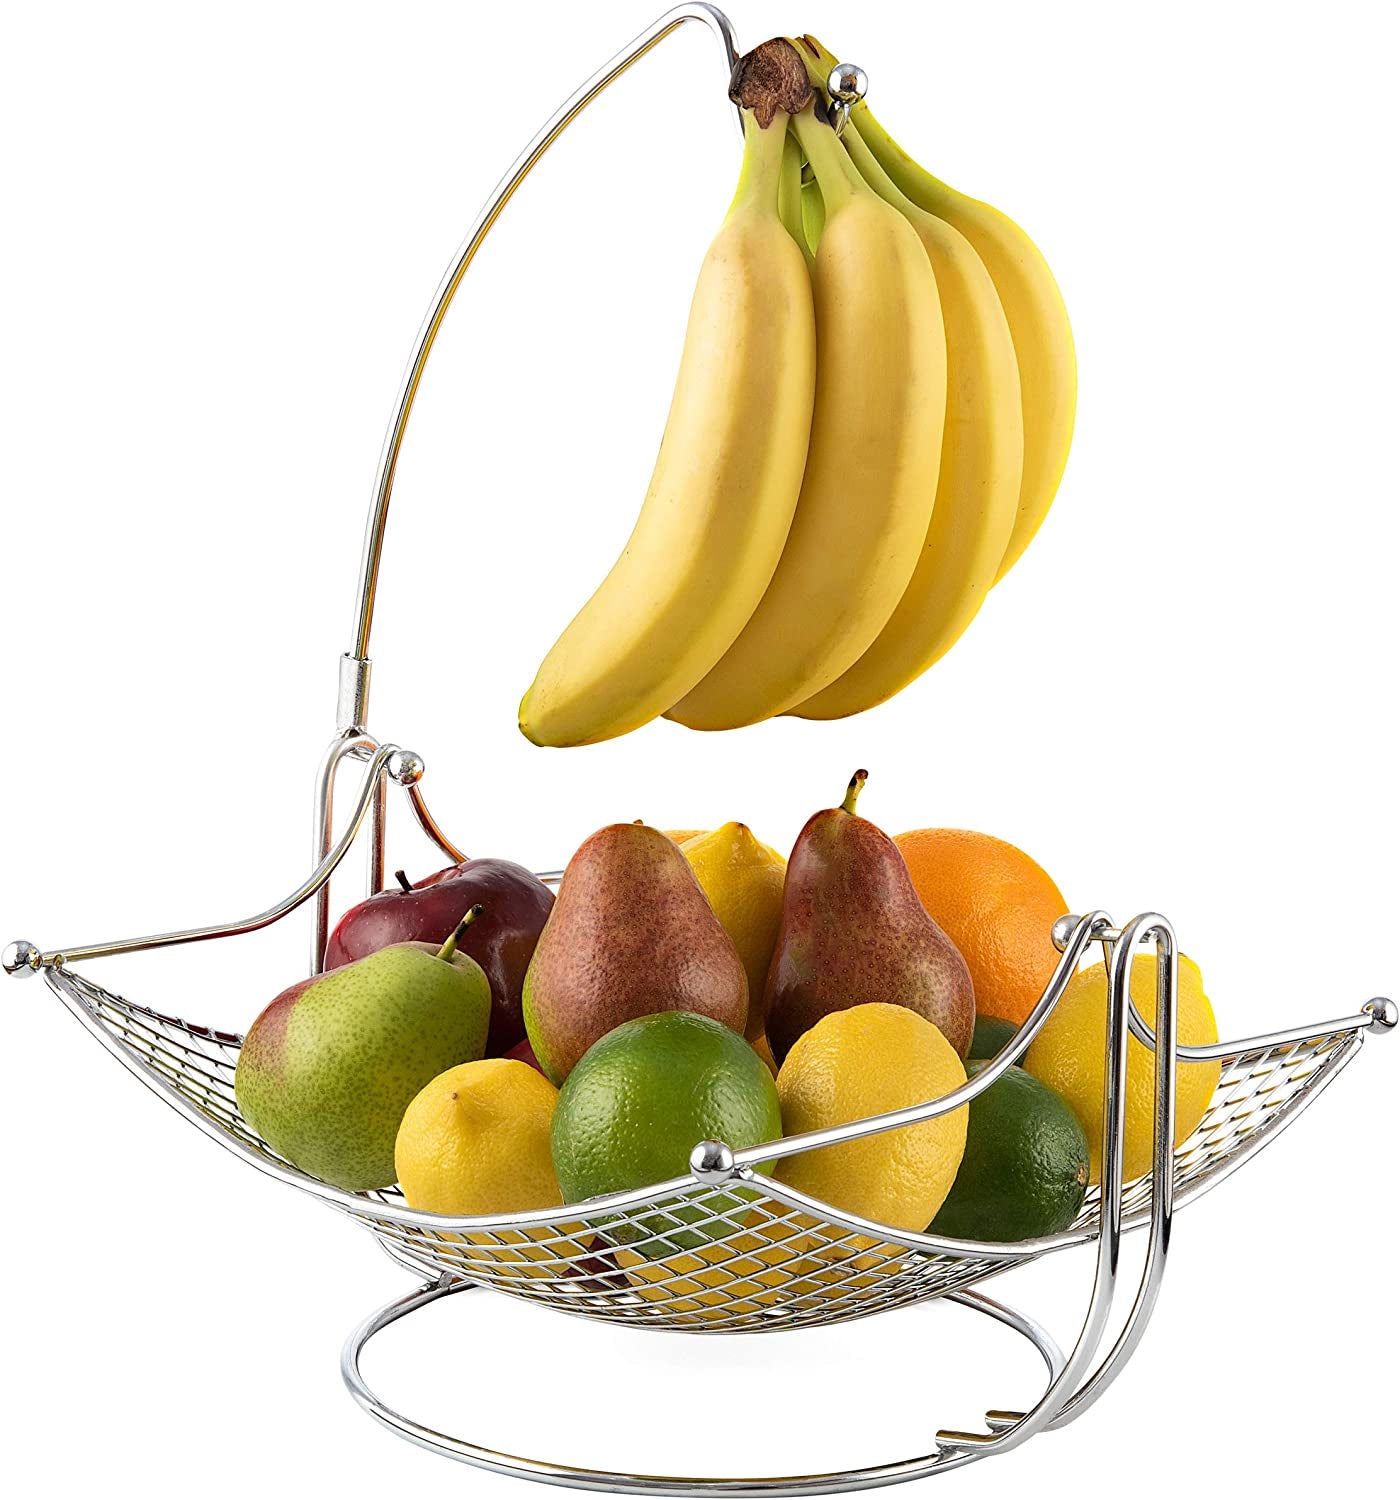 Fruit Bowl with Banana Hanger - Fruit Basket with Detachable Banana Holder - Black Chrome or Bronze Color Options (Chrome)